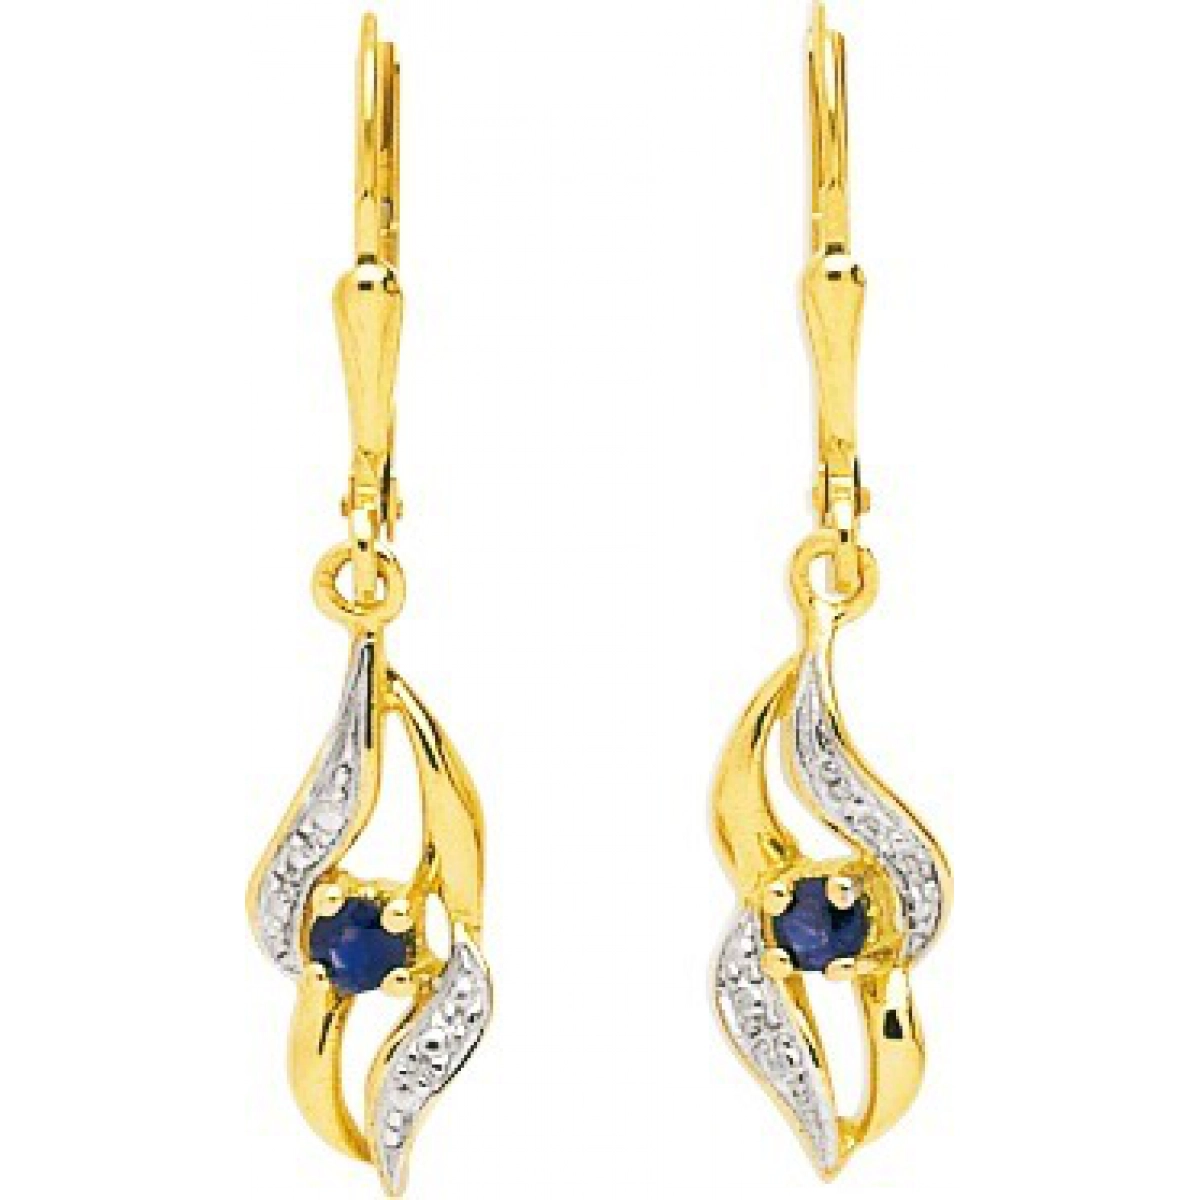 Earrings pair Sapphire 9K YG  Lua Blanca  293035.S3.0